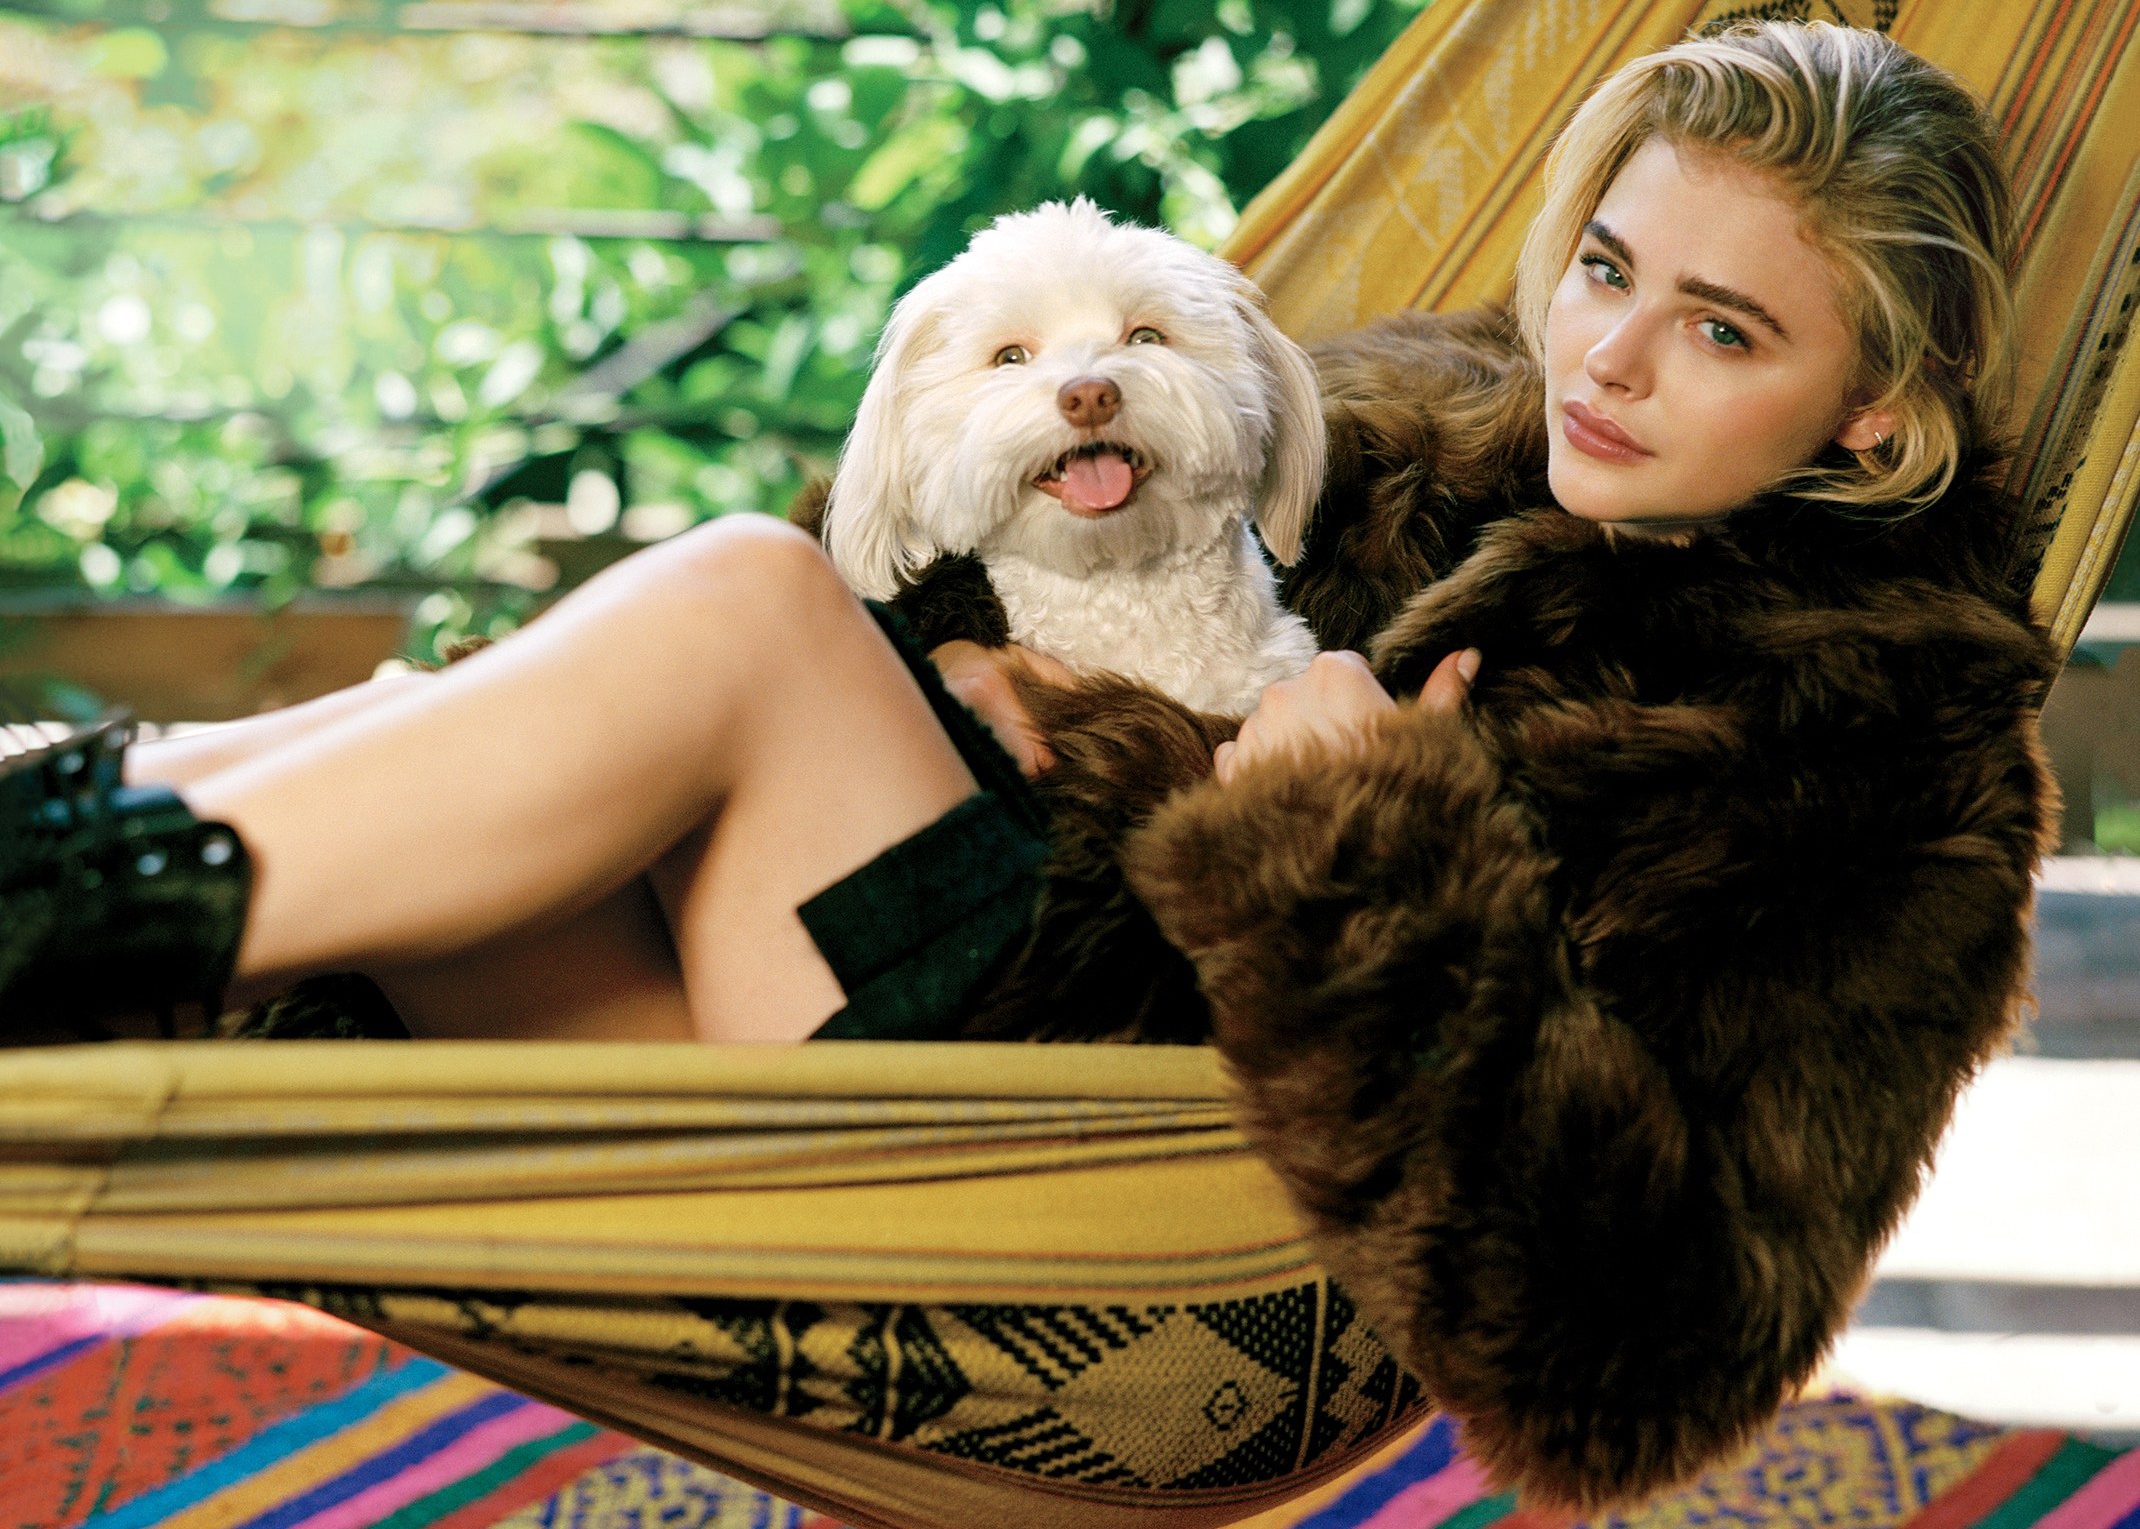 celebrity, chloë grace moretz, actress, american, blonde, dog, green eyes, hammock